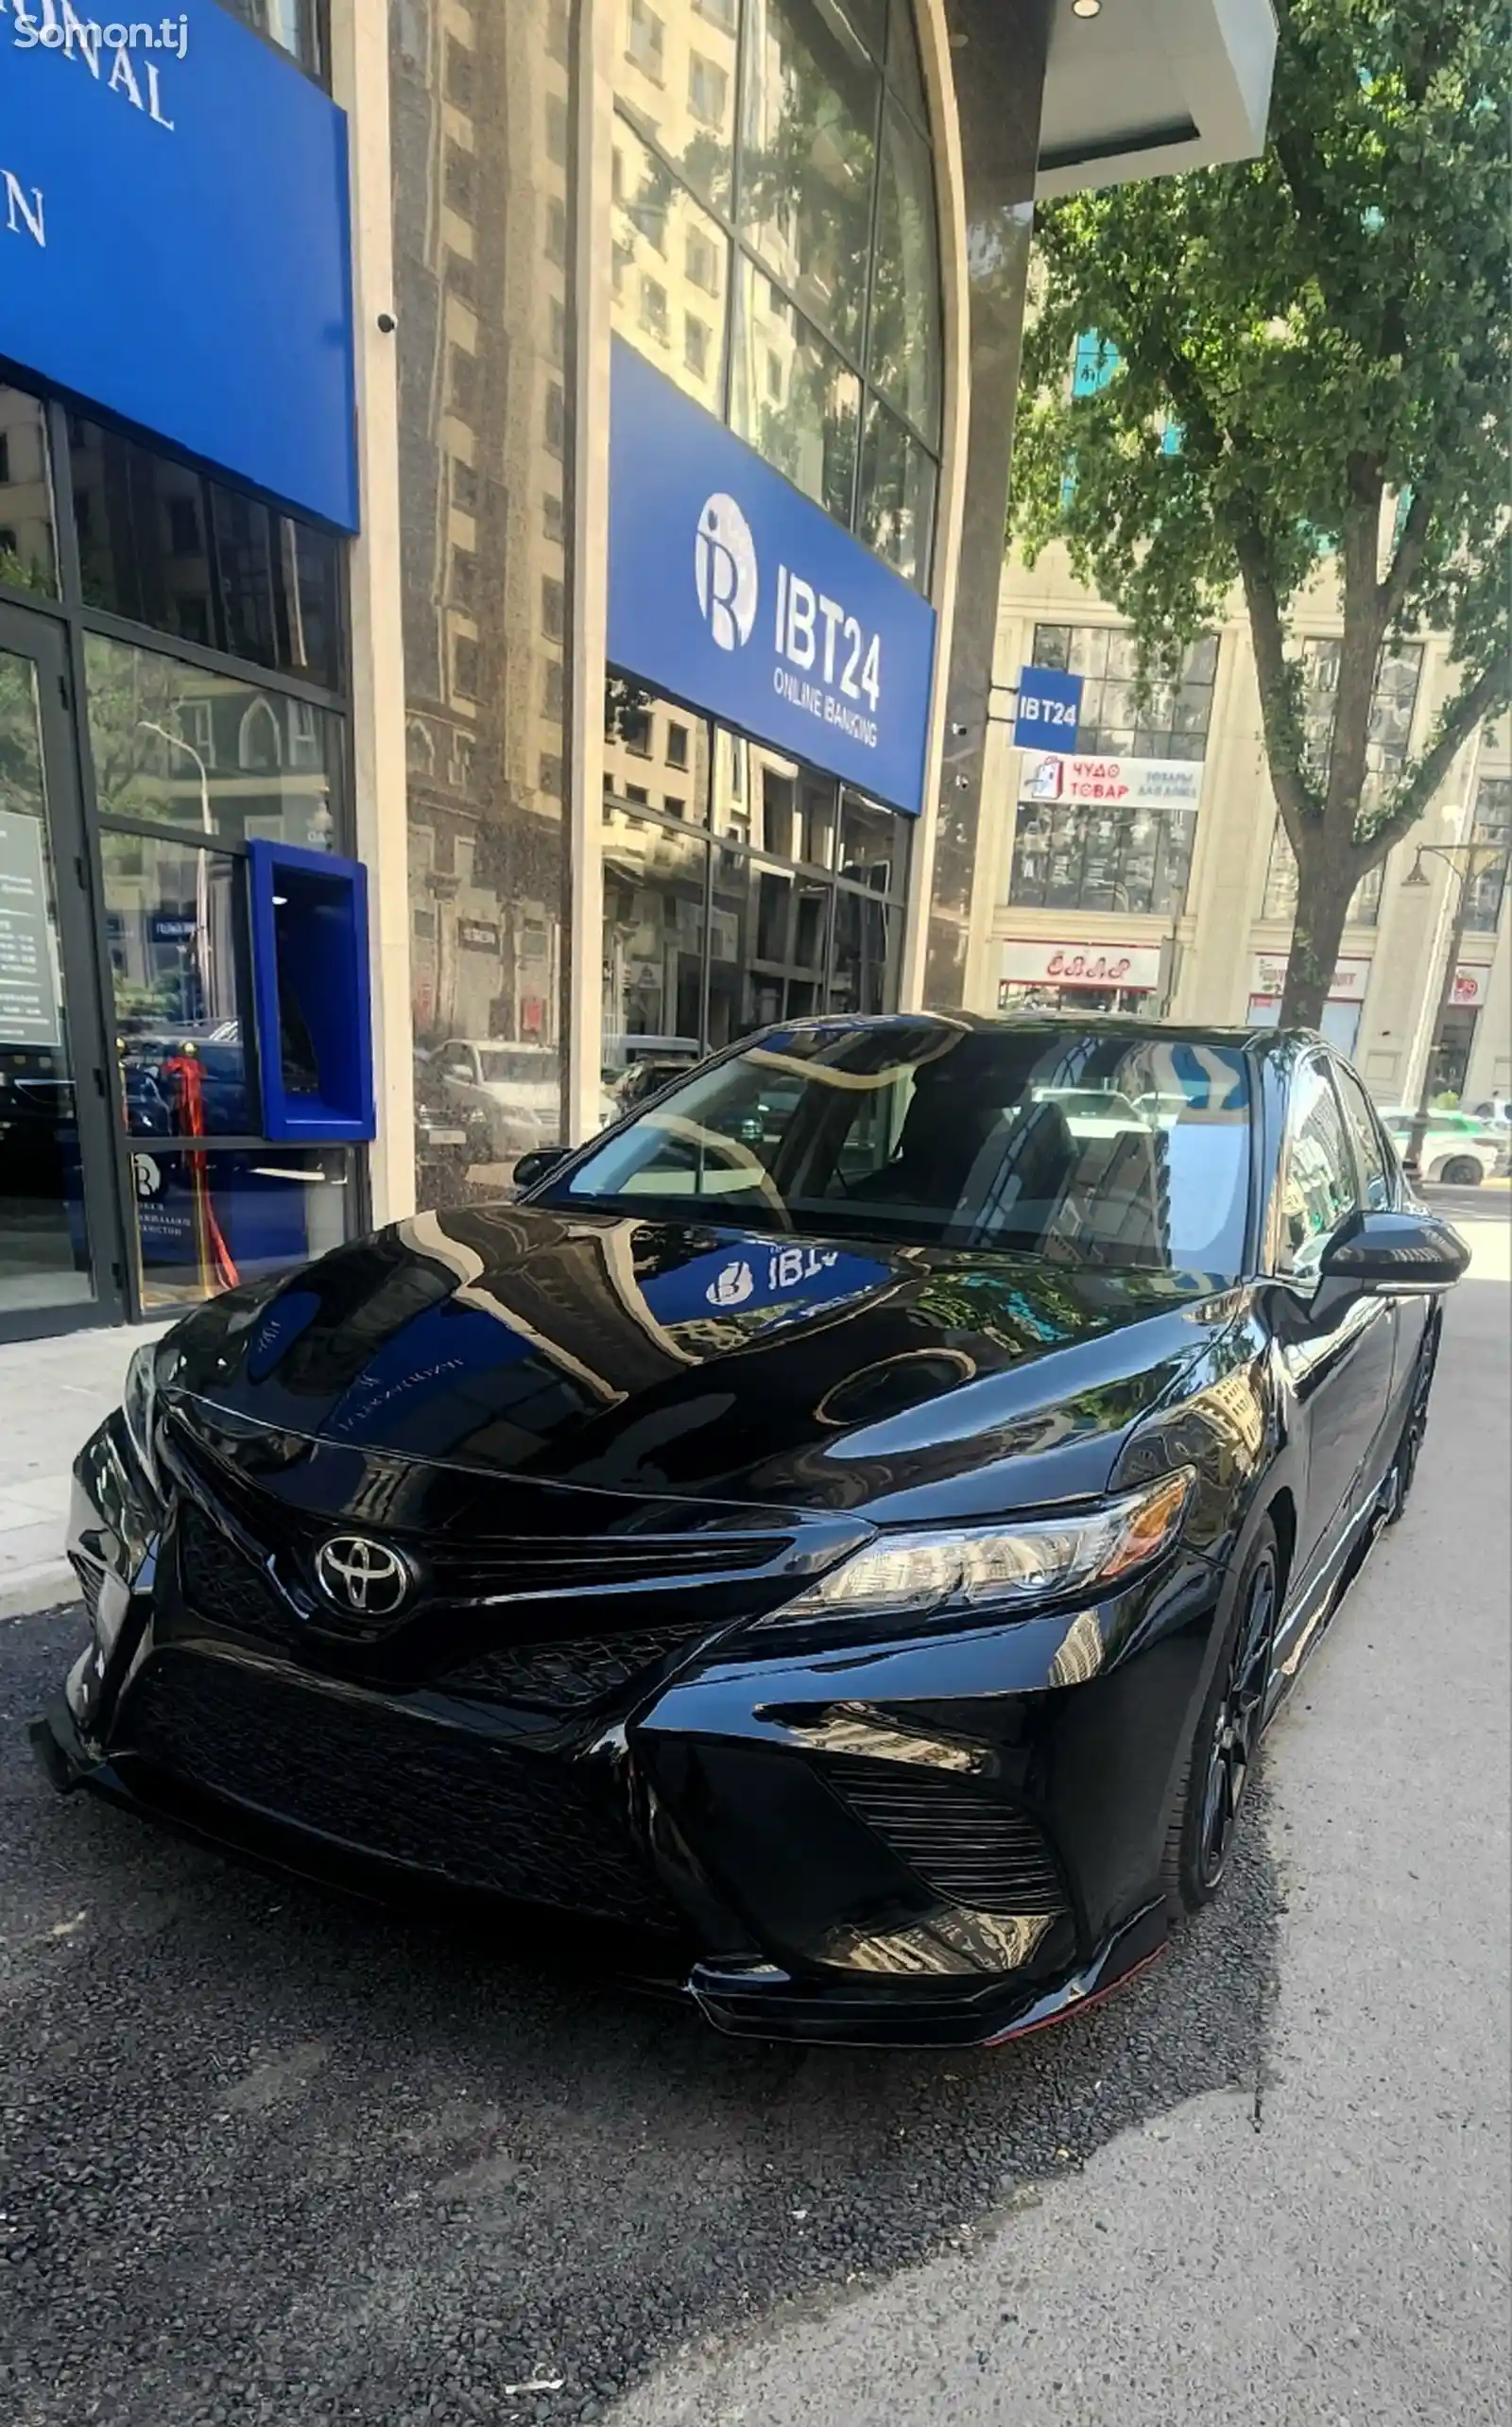 Toyota Camry, 2021-2